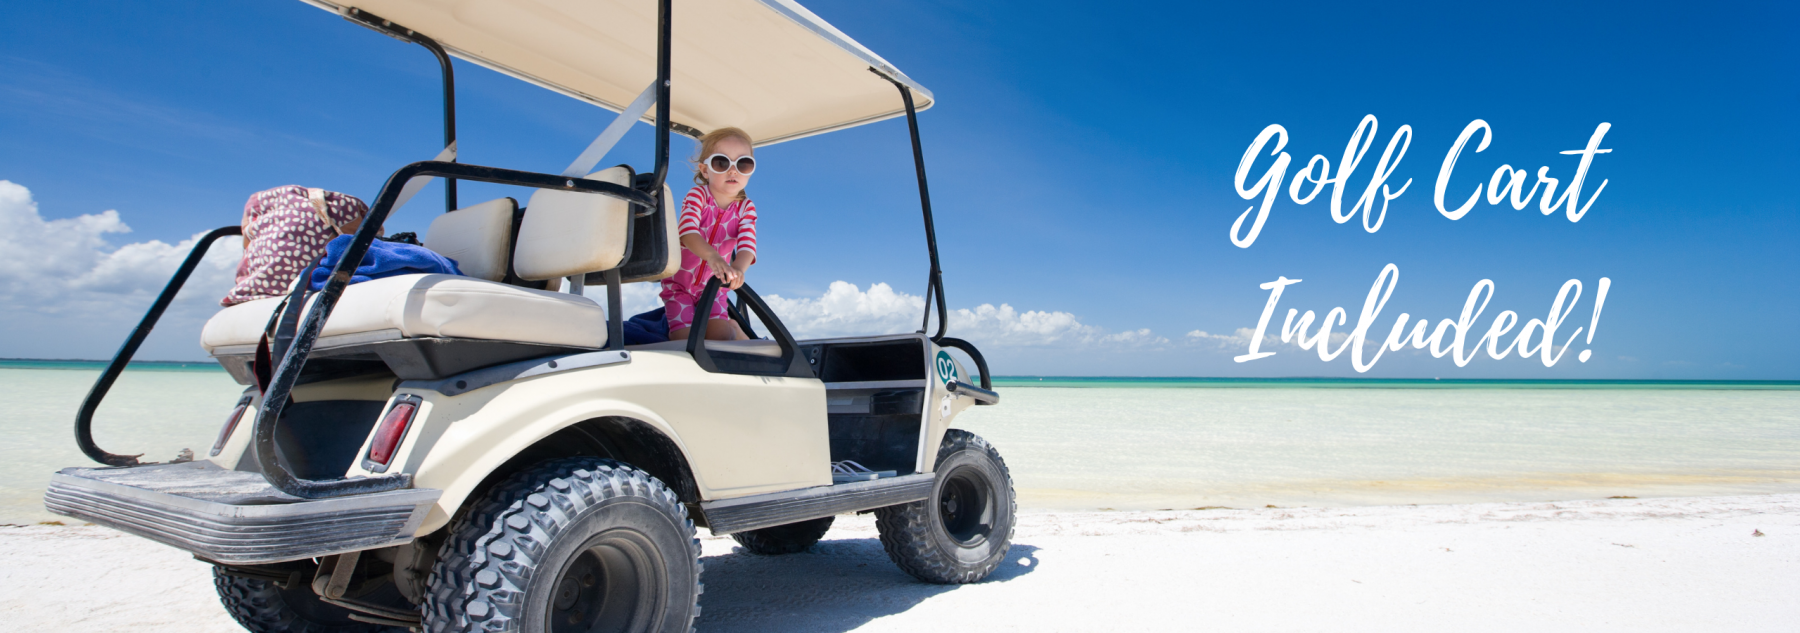 Golf Cart Included Properties - Panhandle Getaways